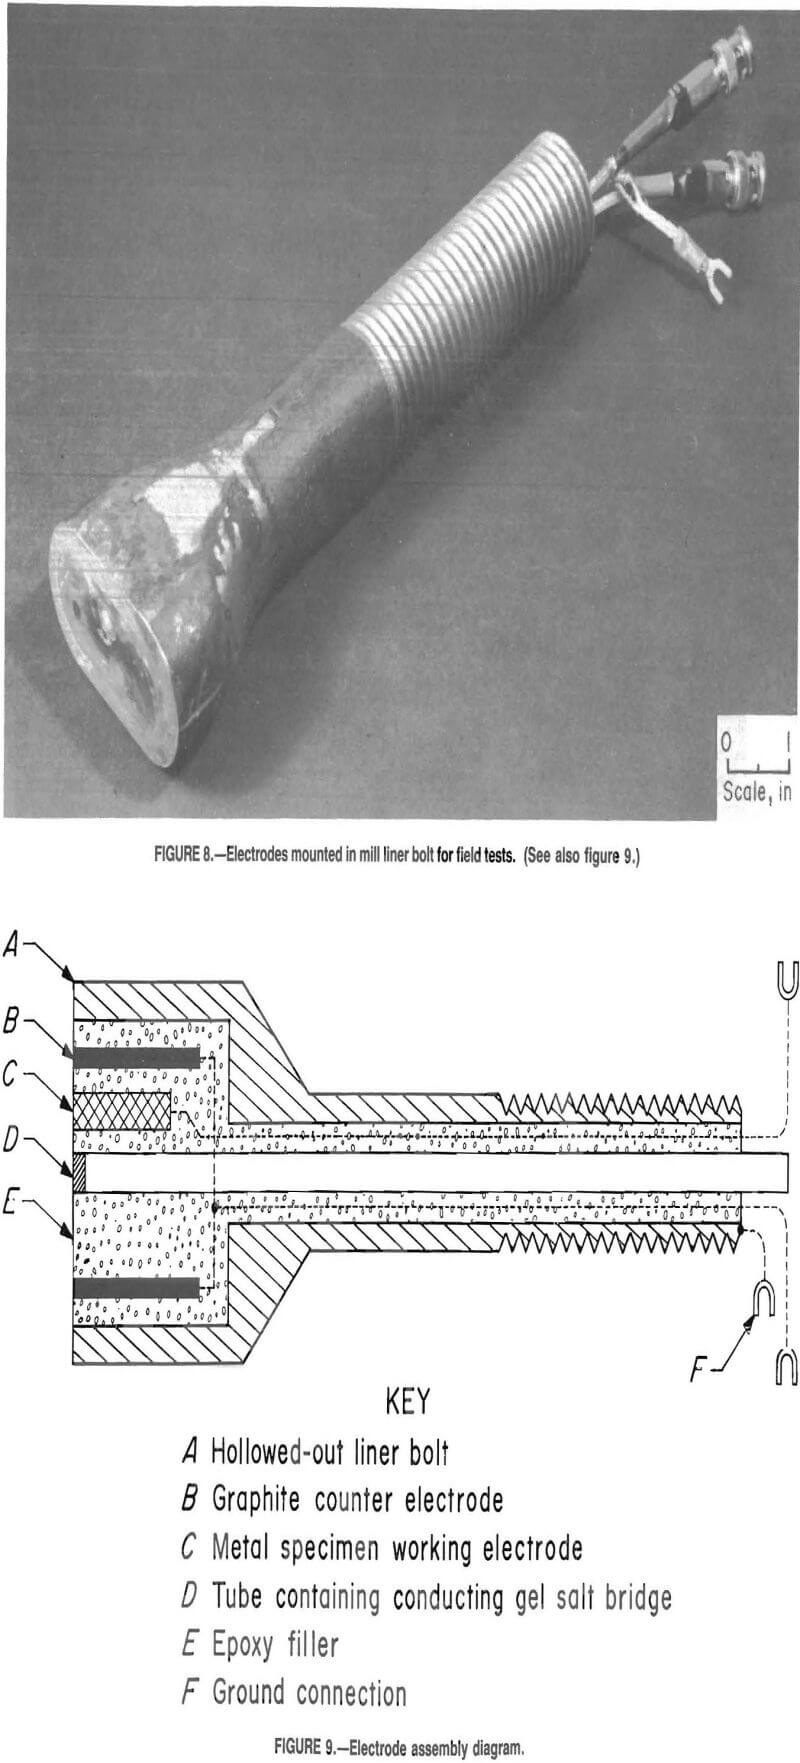 grinding electrode assembly diagram